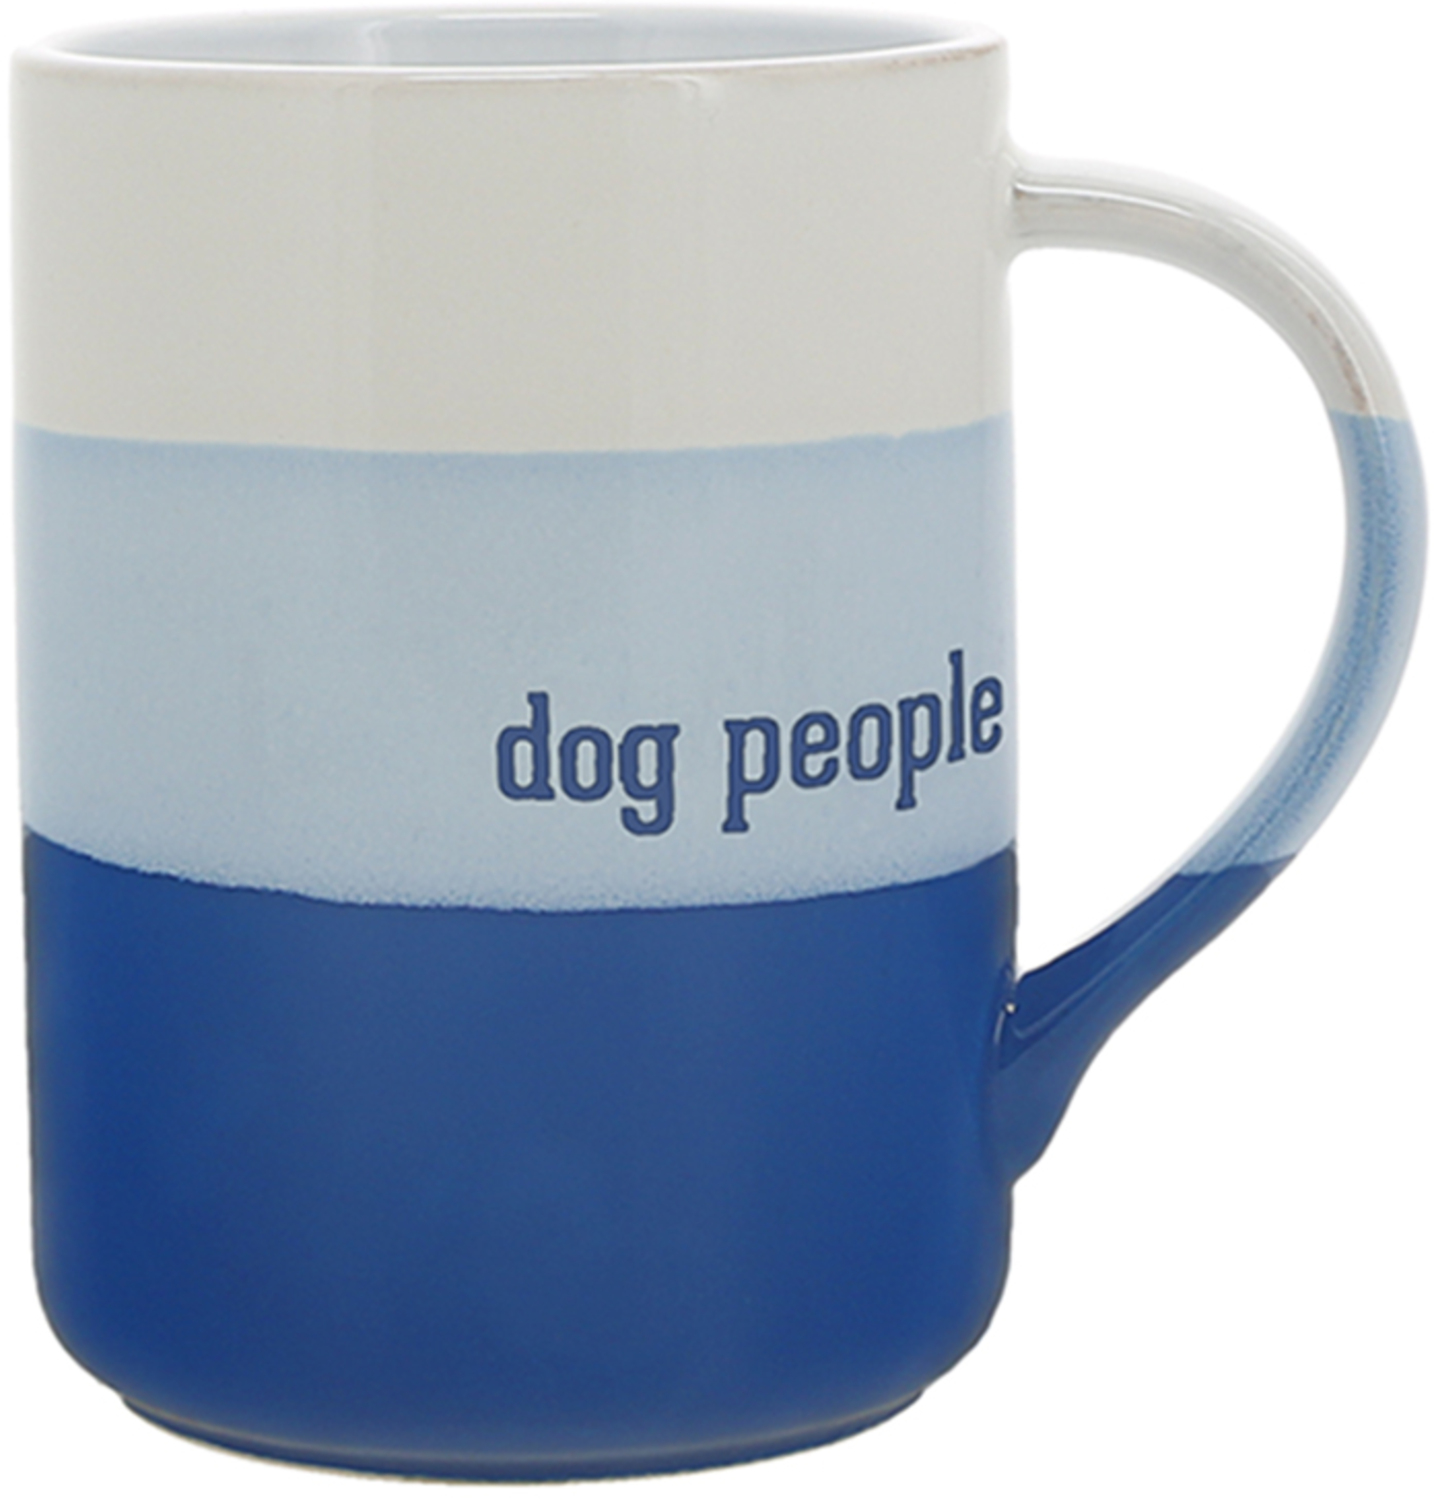 Dog People by We Pets - Dog People - 18 oz. Mug